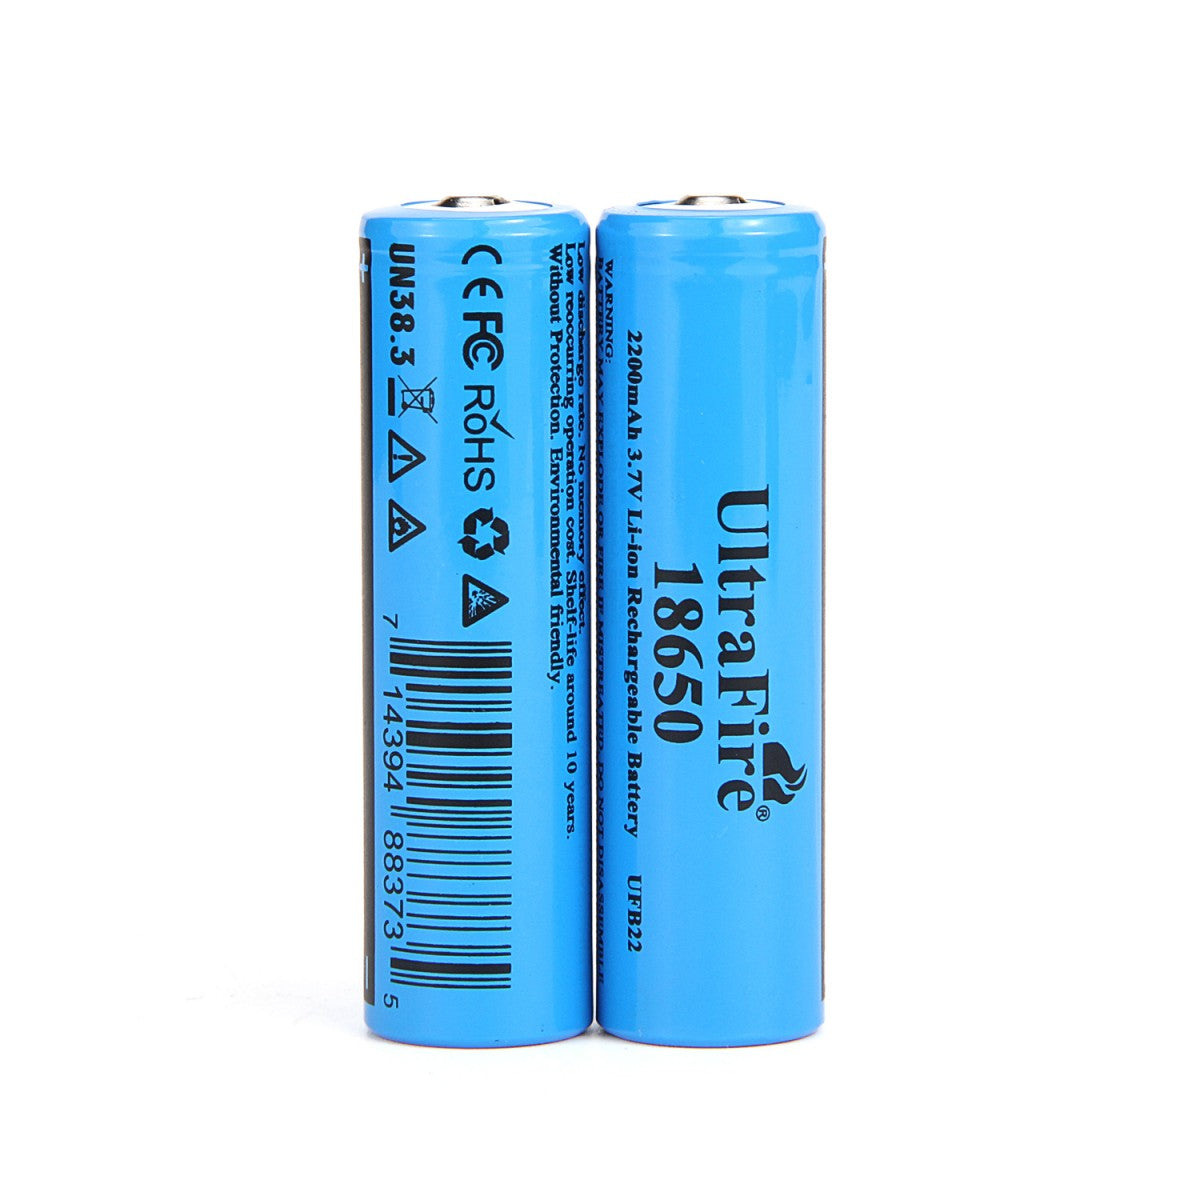  2200mAh Rechargeable Batteries, Riloer Flame-retardant Shell  Lithium Core Batteries, UL FCC Safety certification Black Dustproof  Batteries : Health & Household